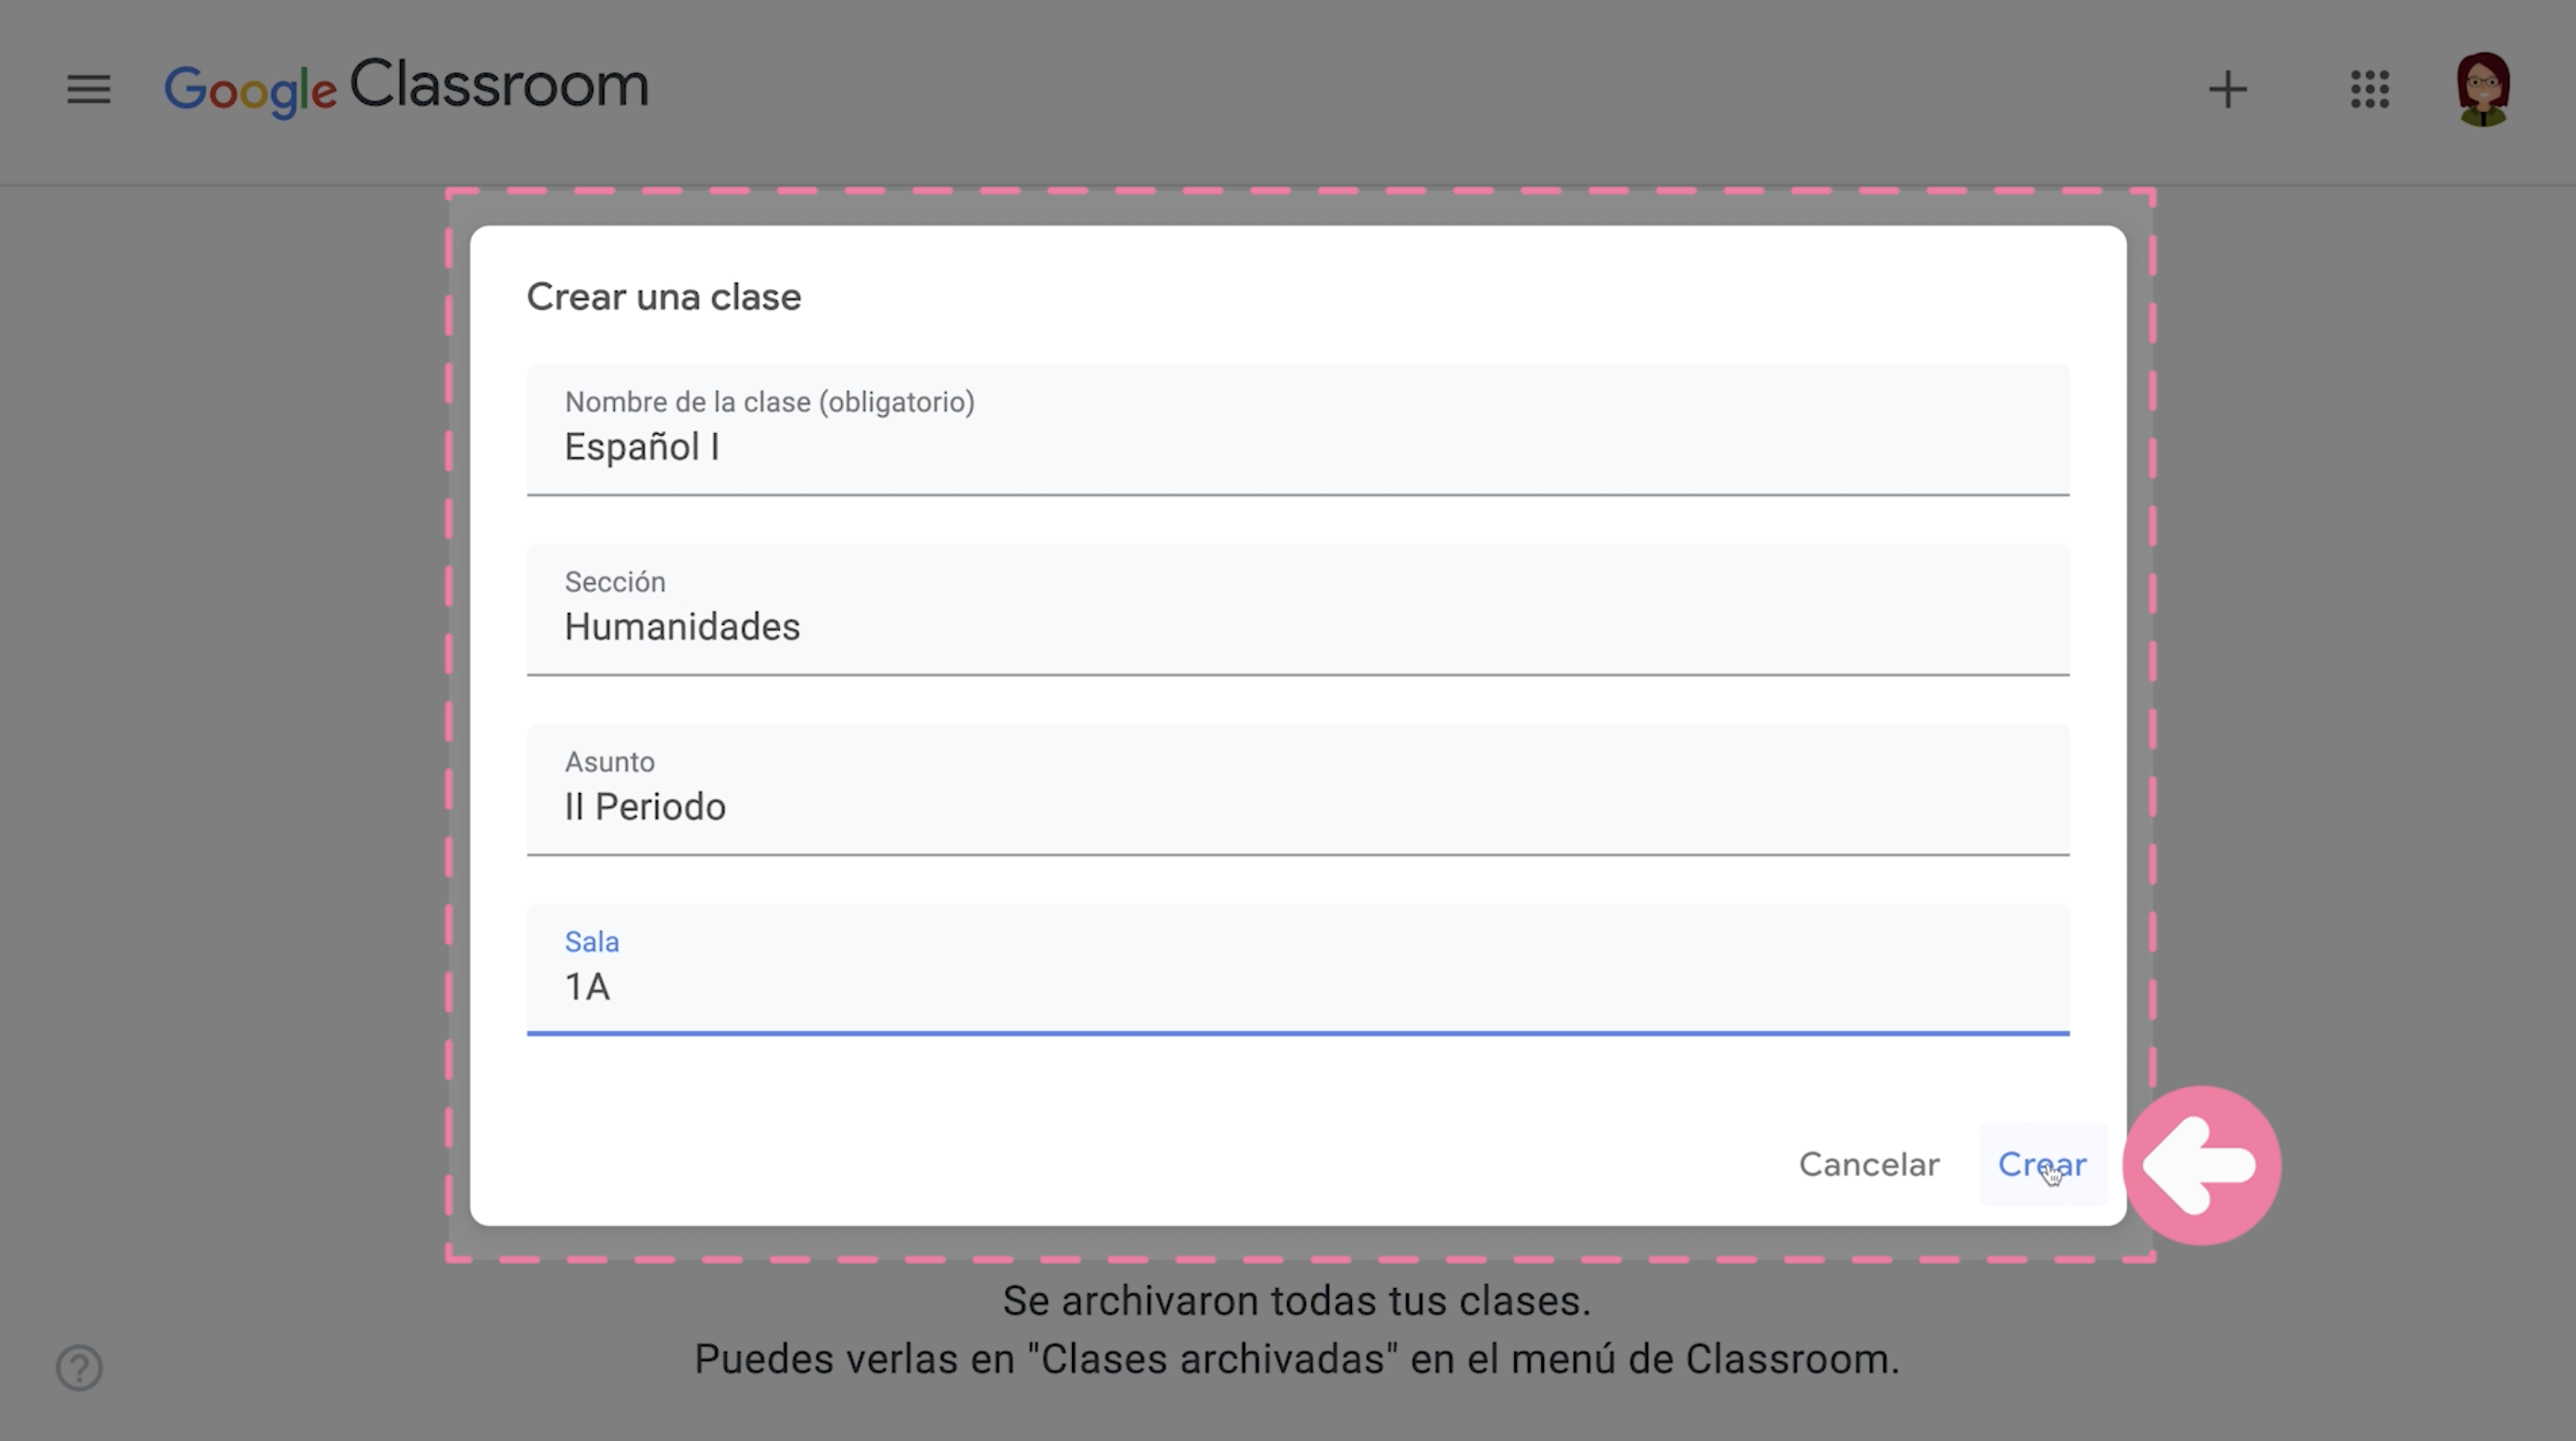 Ingresar datos de clase y hacer clic en botón Crear para construir clase en Google Classroom